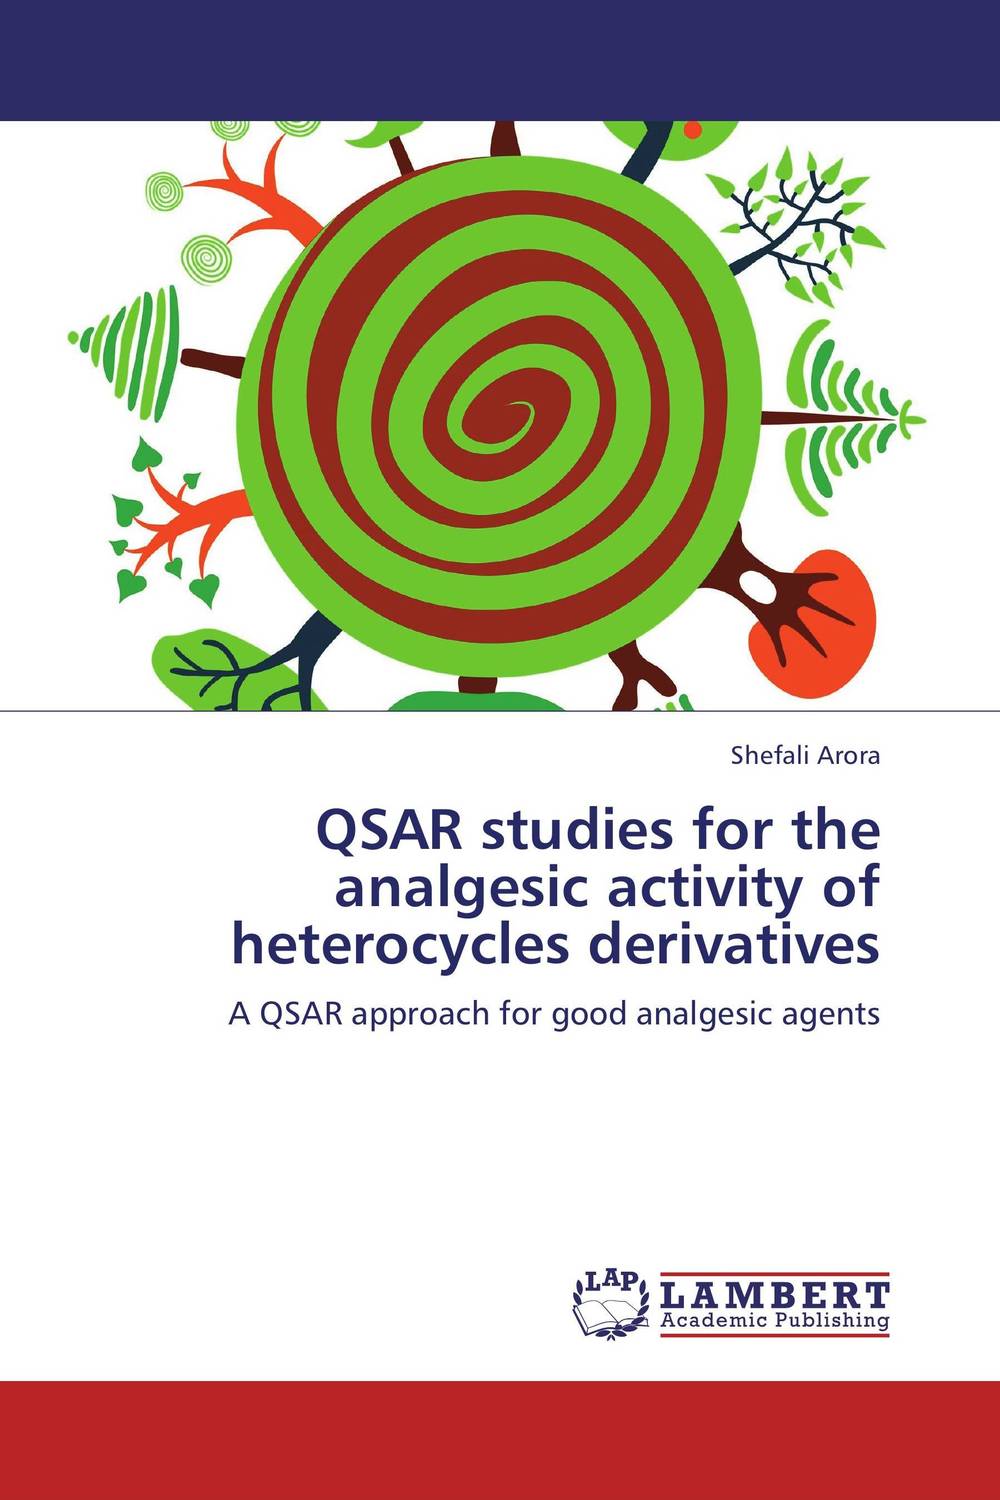 QSAR studies for the analgesic activity of heterocycles derivatives